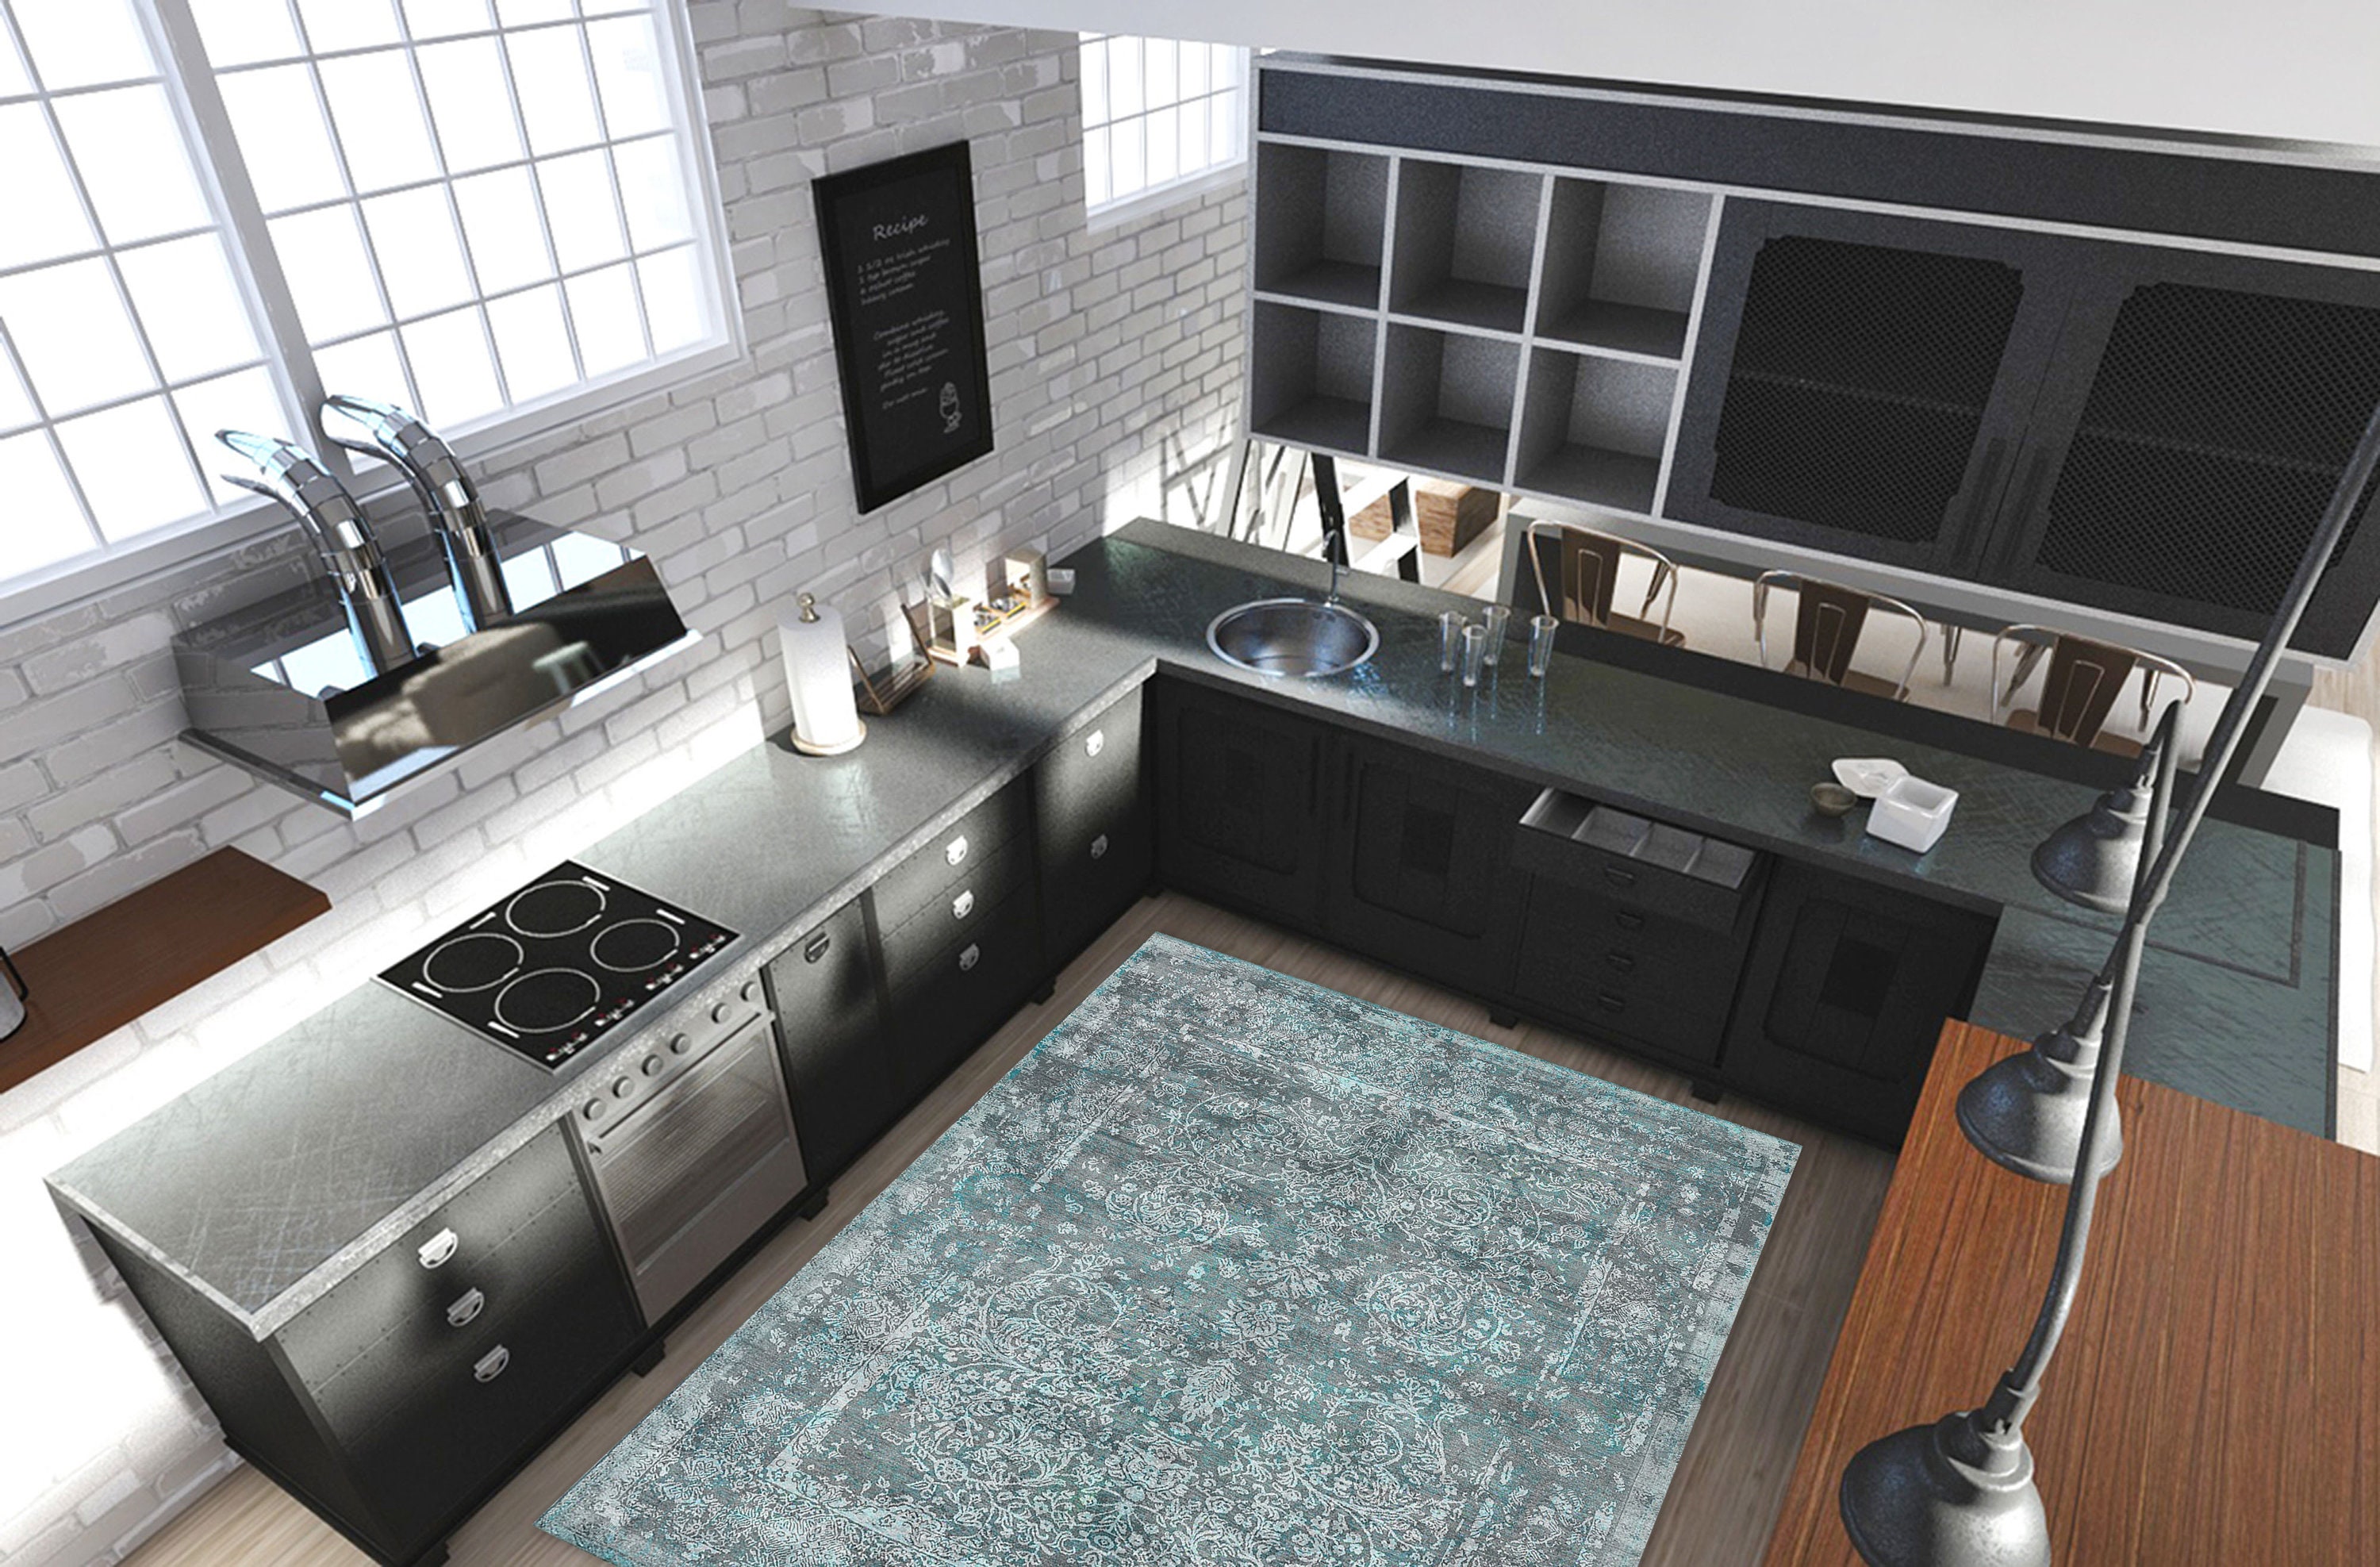 Nuolin Modern PVC long strip kitchen floor mats household